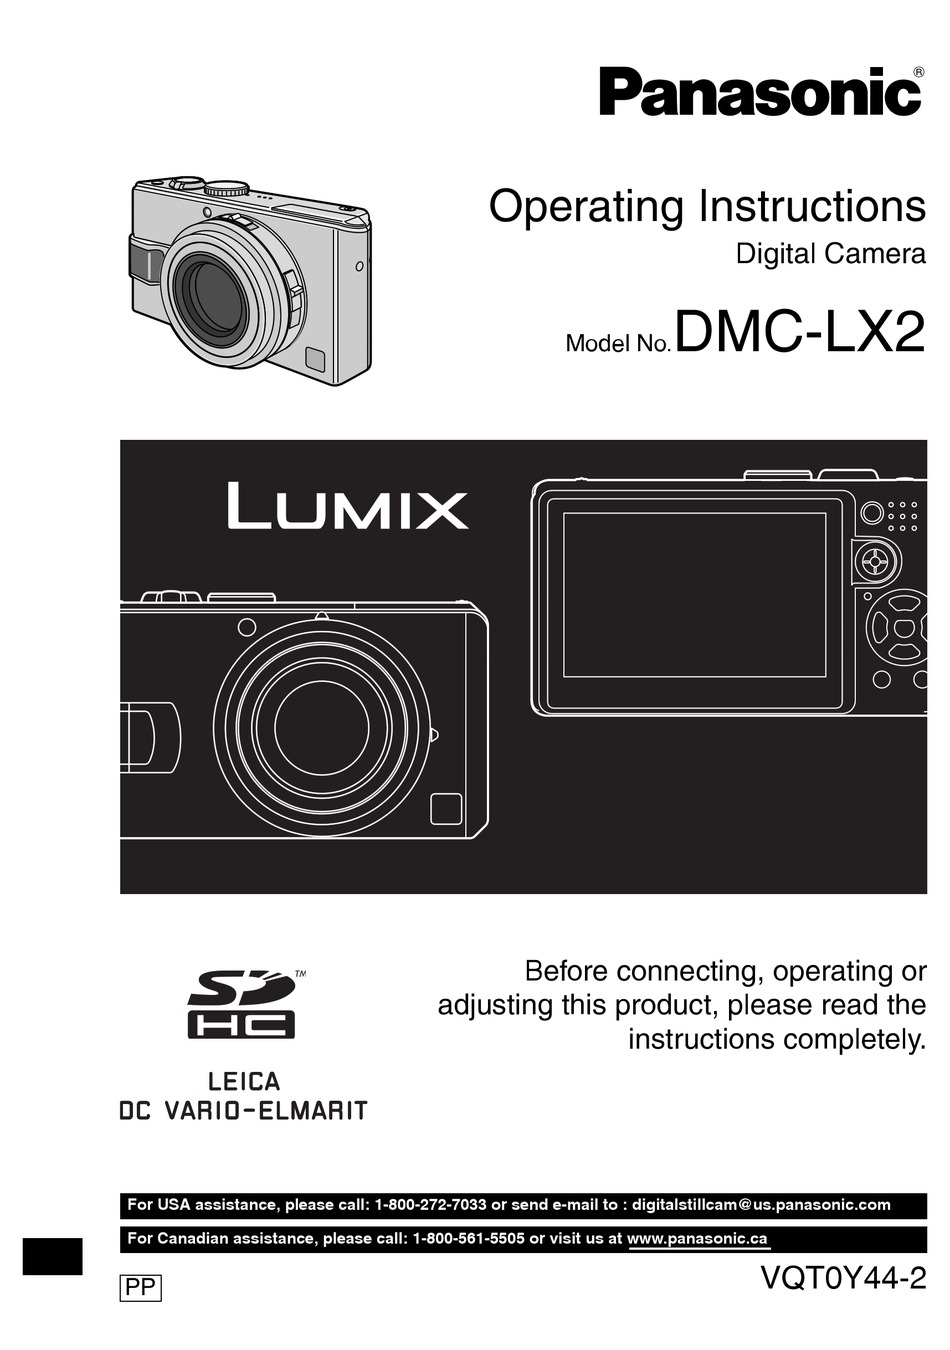 PANASONIC LUMIX DMC-LX2 OPERATING INSTRUCTIONS MANUAL Pdf Download